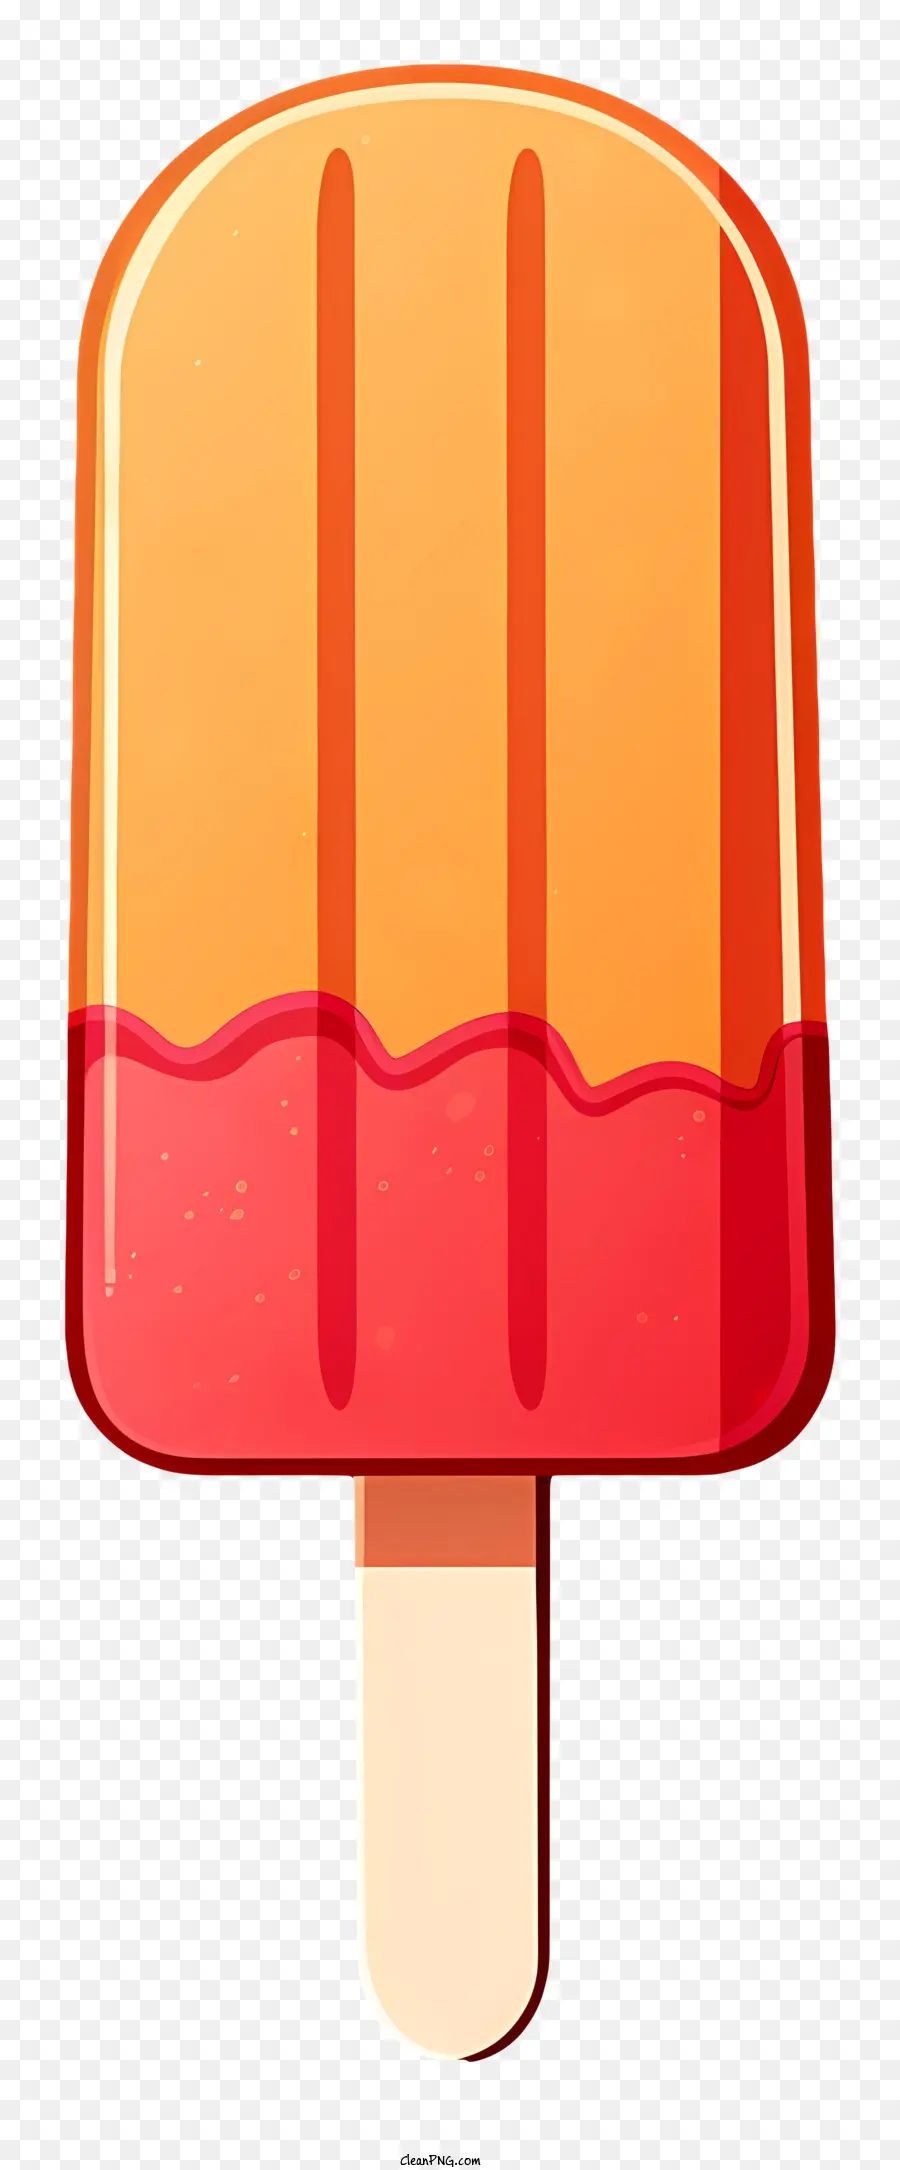 popsicle orange popsicle pink popsicle ice cream on a stick ice cream texture